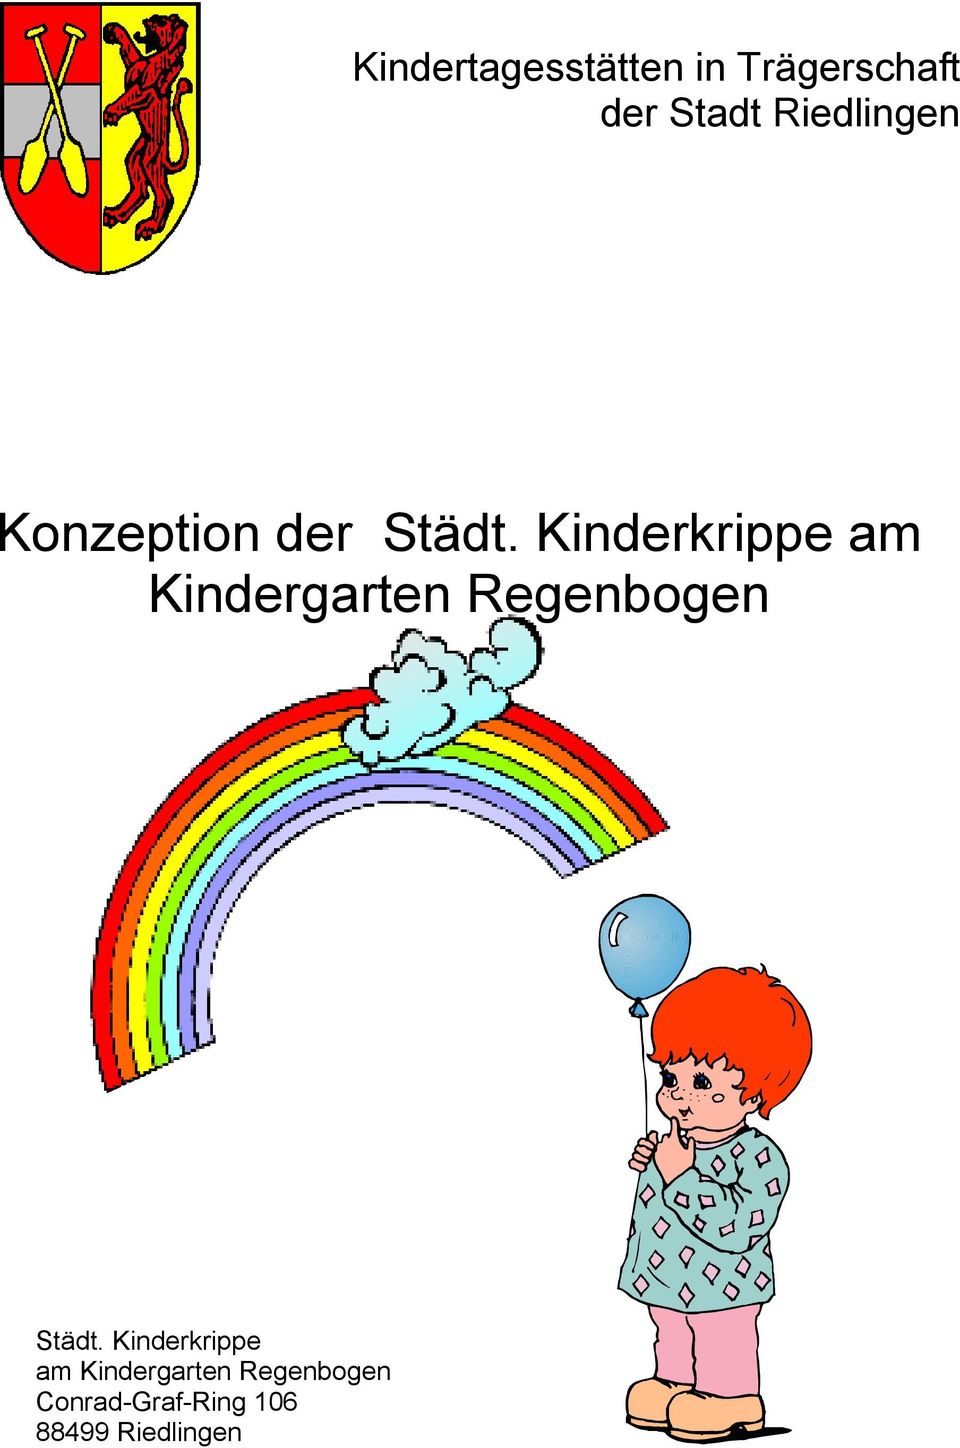 Kinderkrippe am Kindergarten Regenbogen Städt.